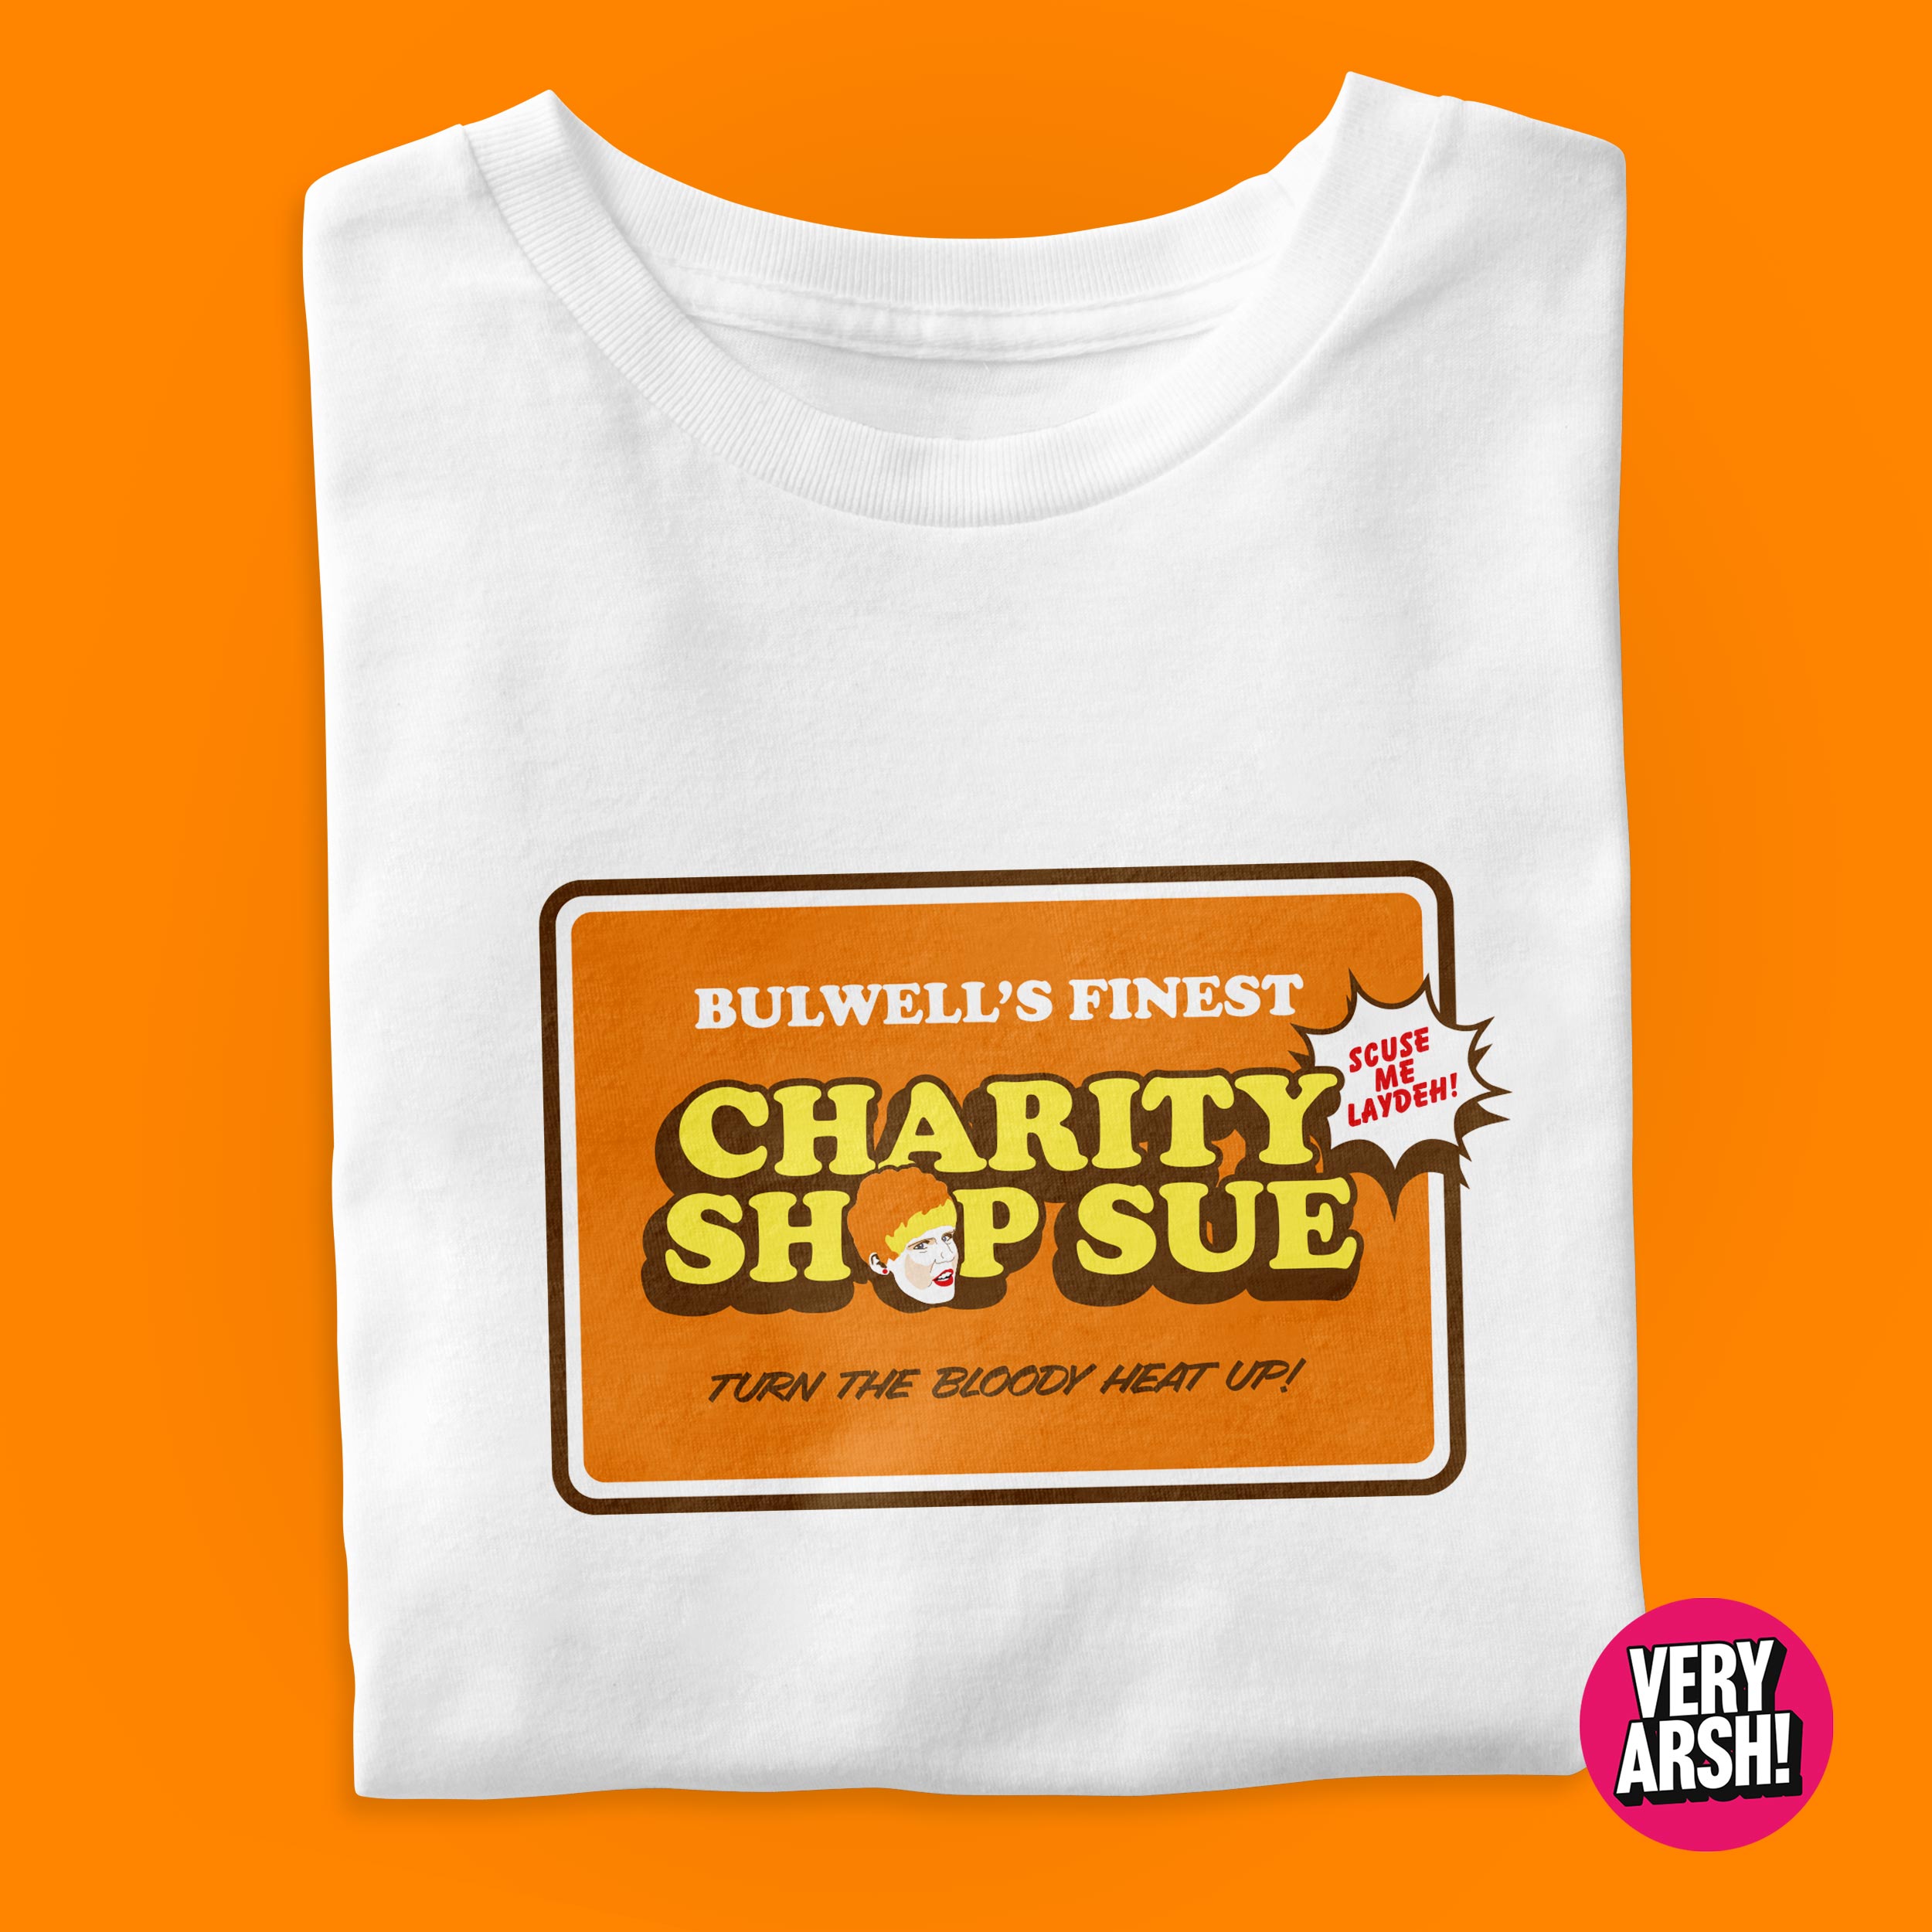 Happy Shopper Sue - Charity Shop Sue inspired T-Shirt